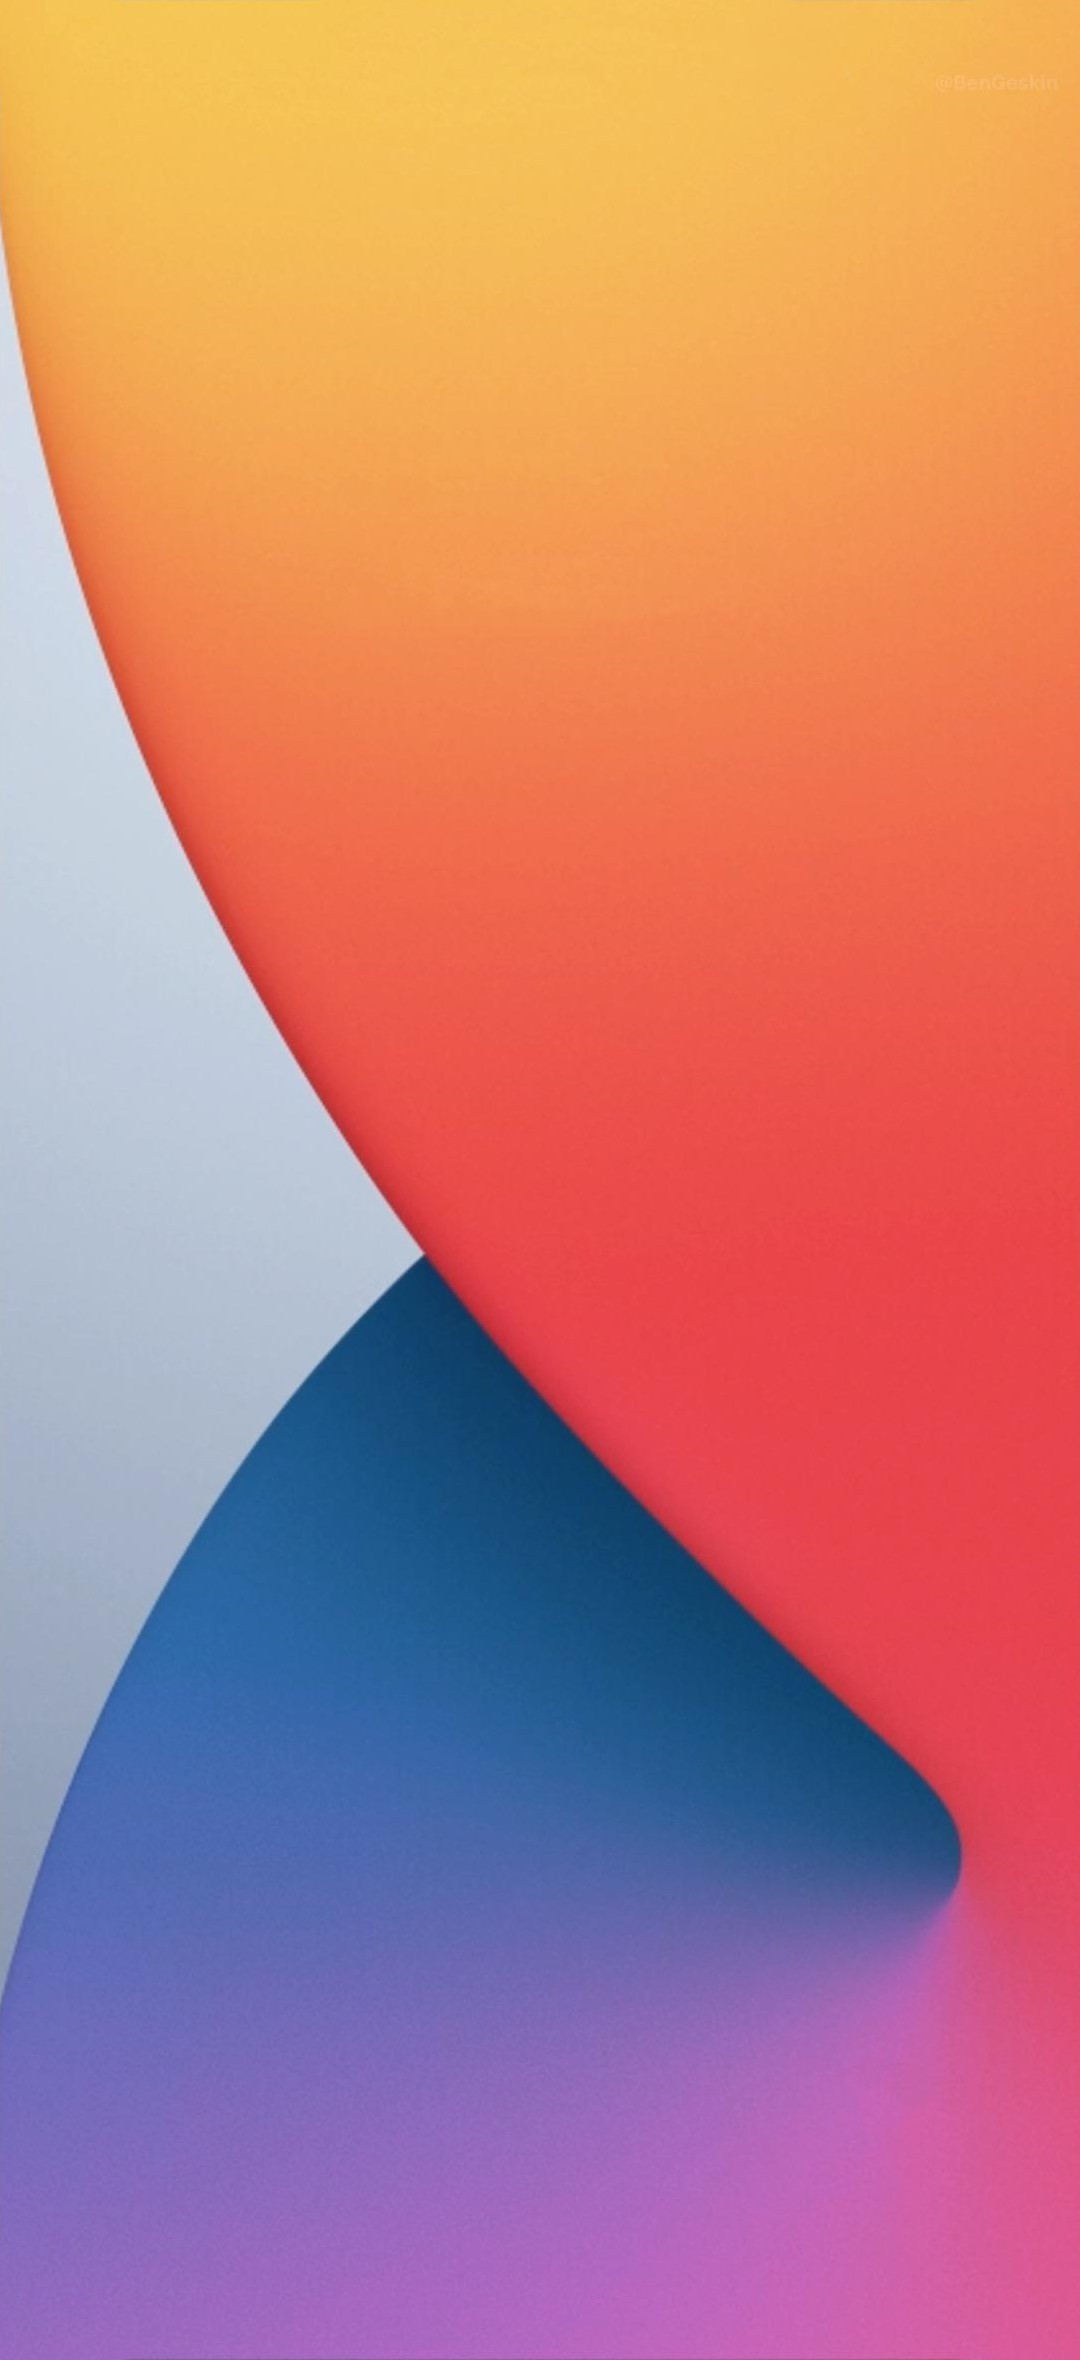 iOS 14 Wallpaper - KoLPaPer - Awesome Free HD Wallpapers